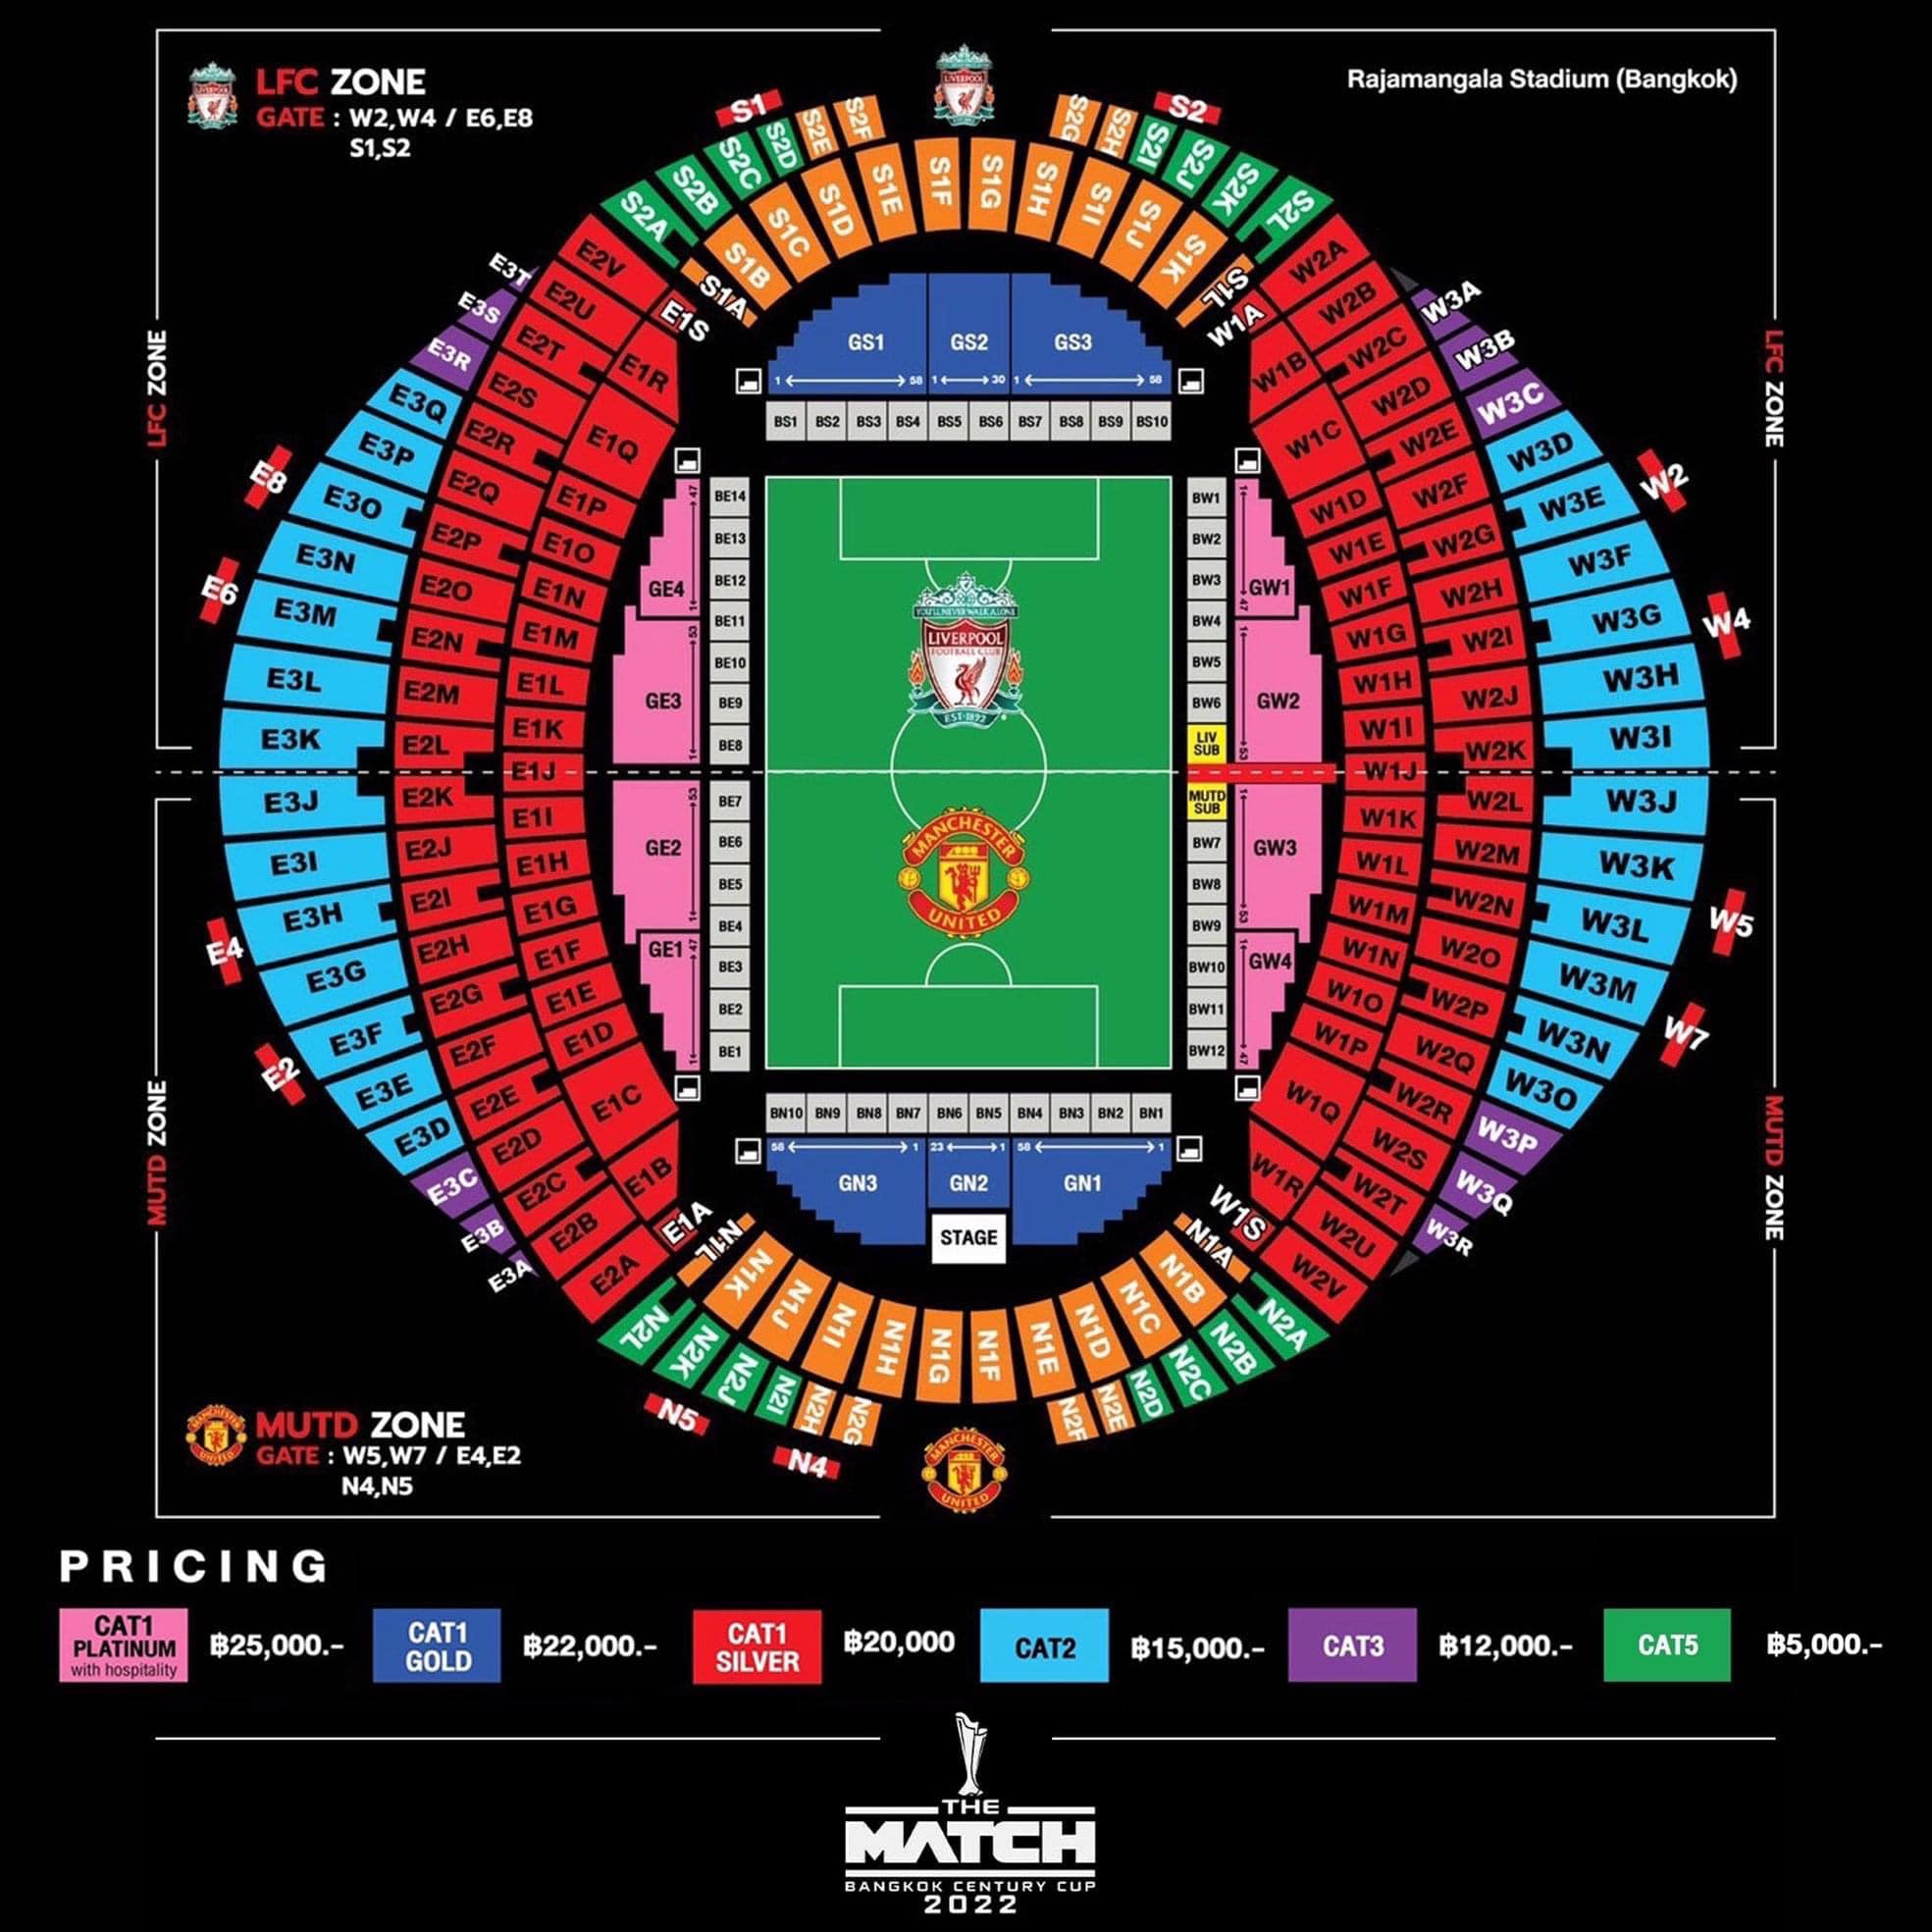 Liverpool Manchester Premiere League football match in Bangkok